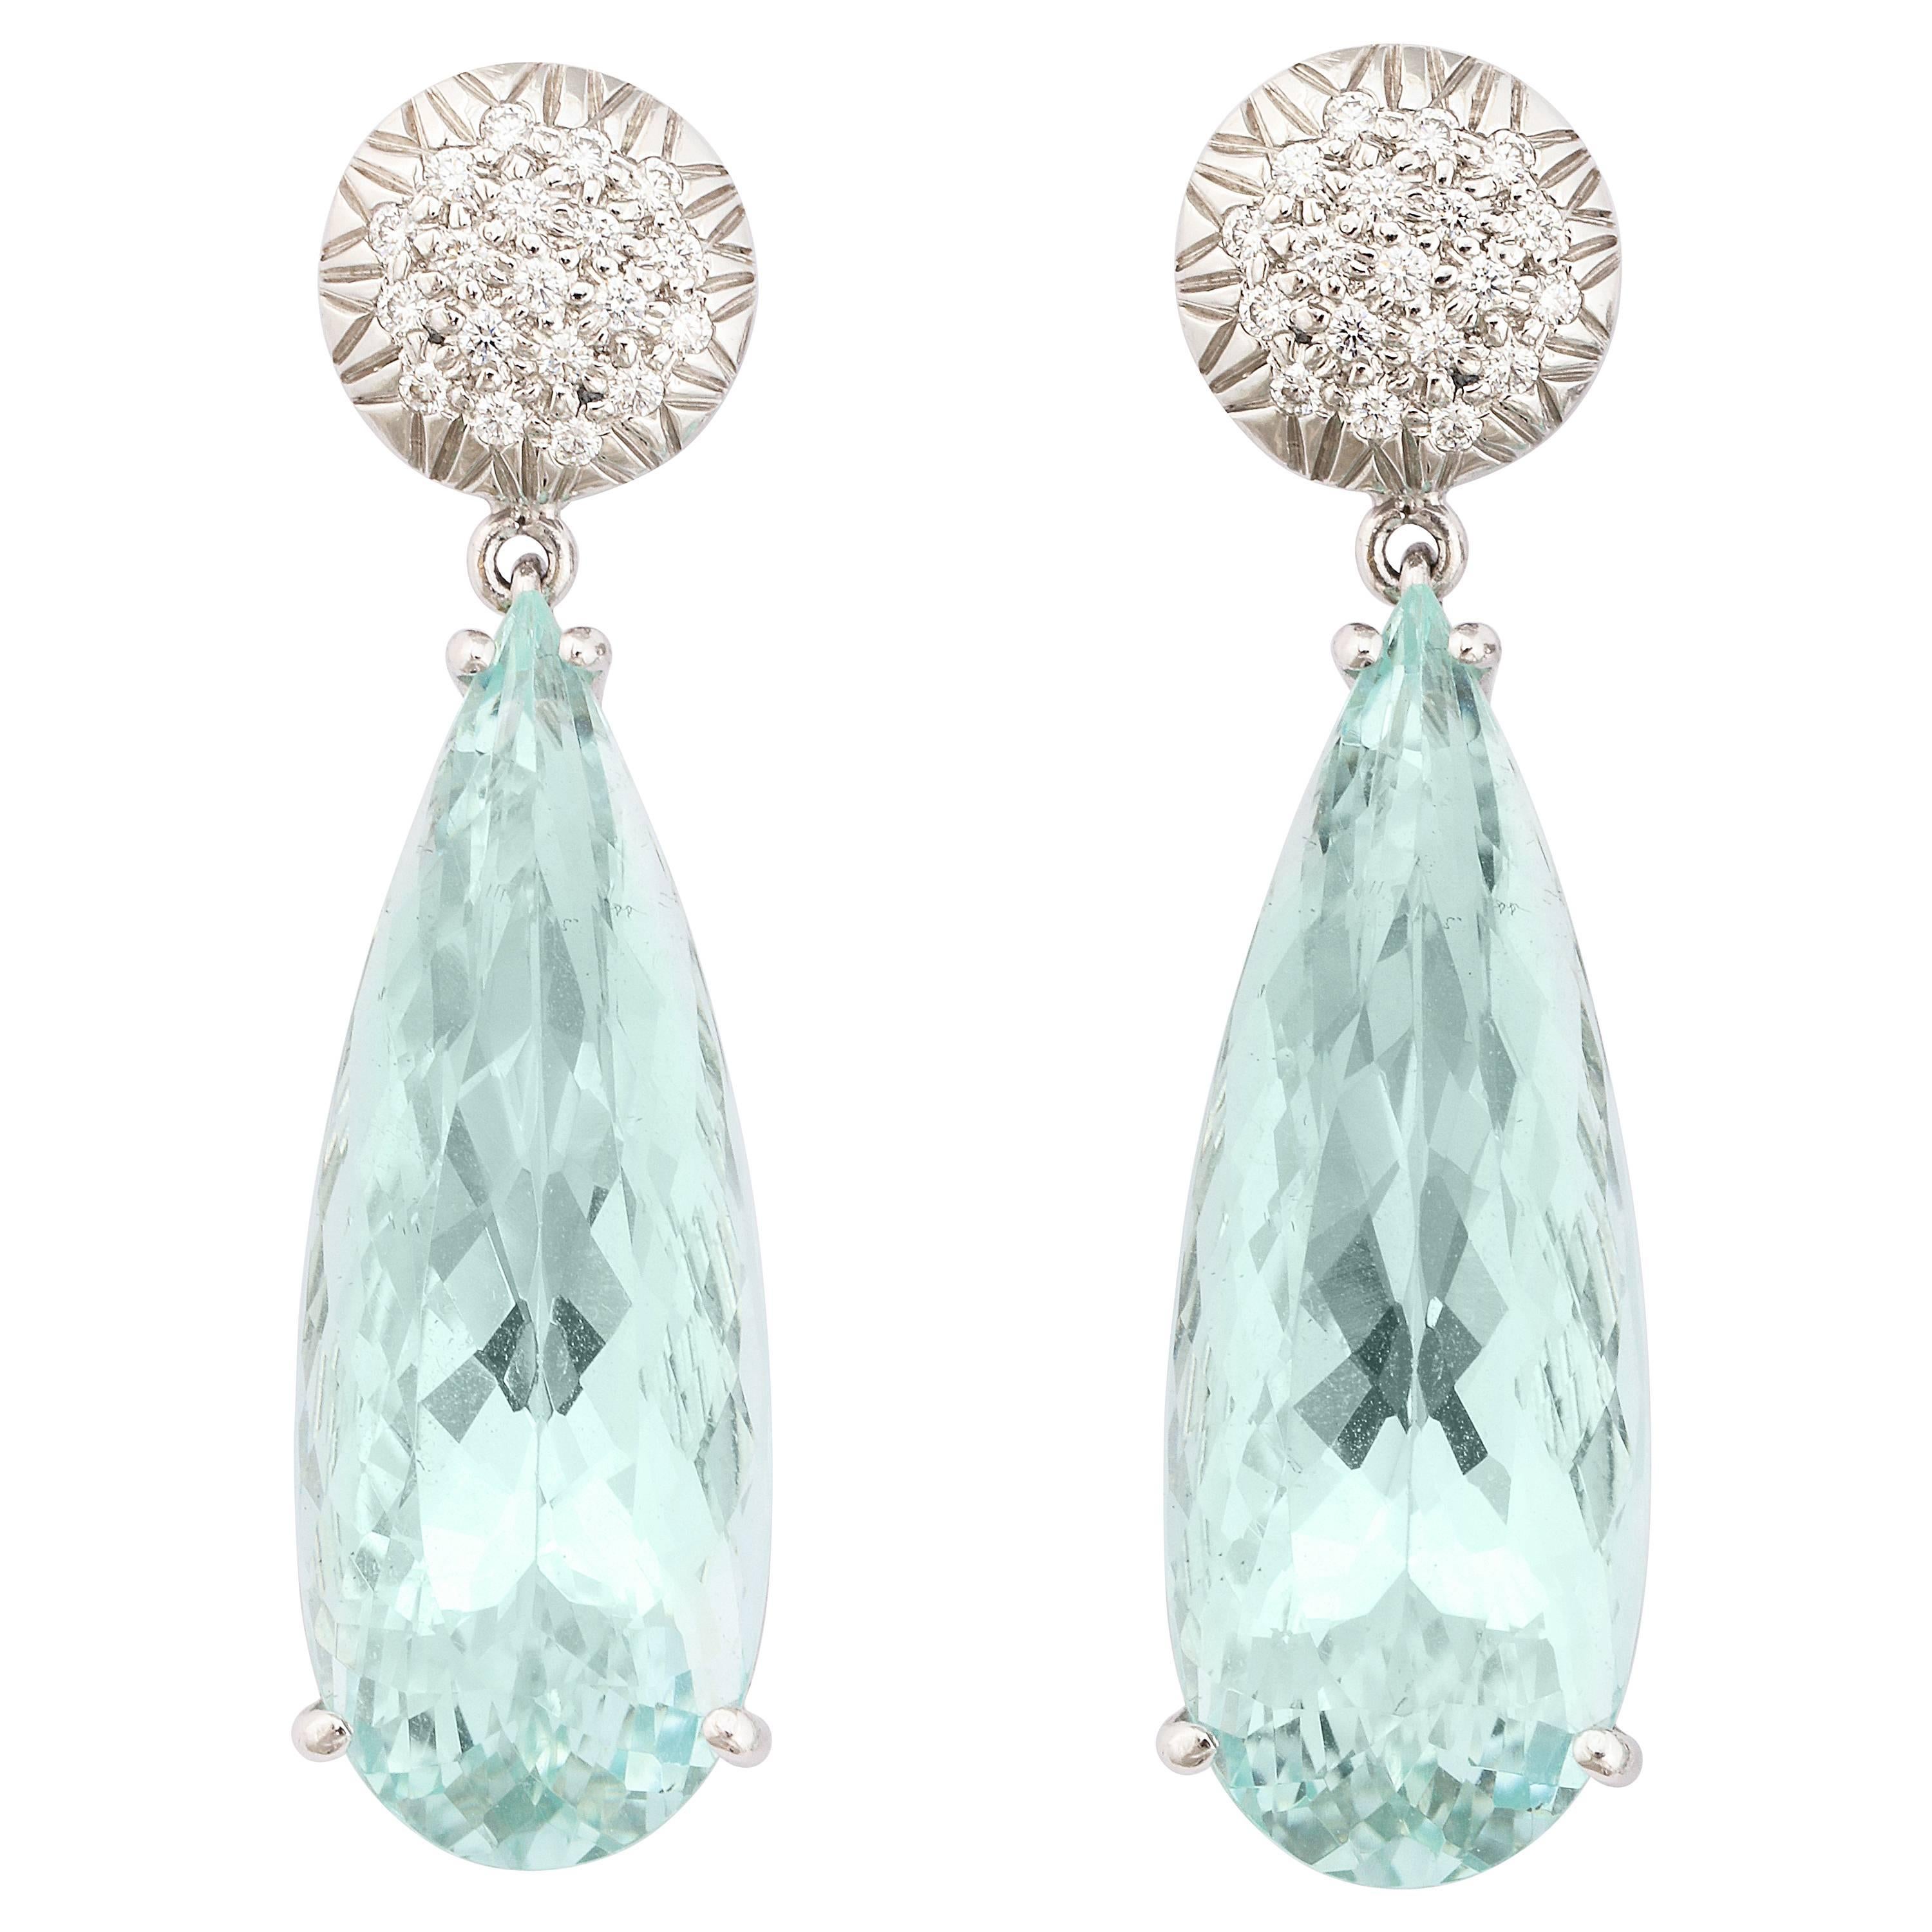 18k white gold, aquamarine and white diamonds, fancy cut earrings.